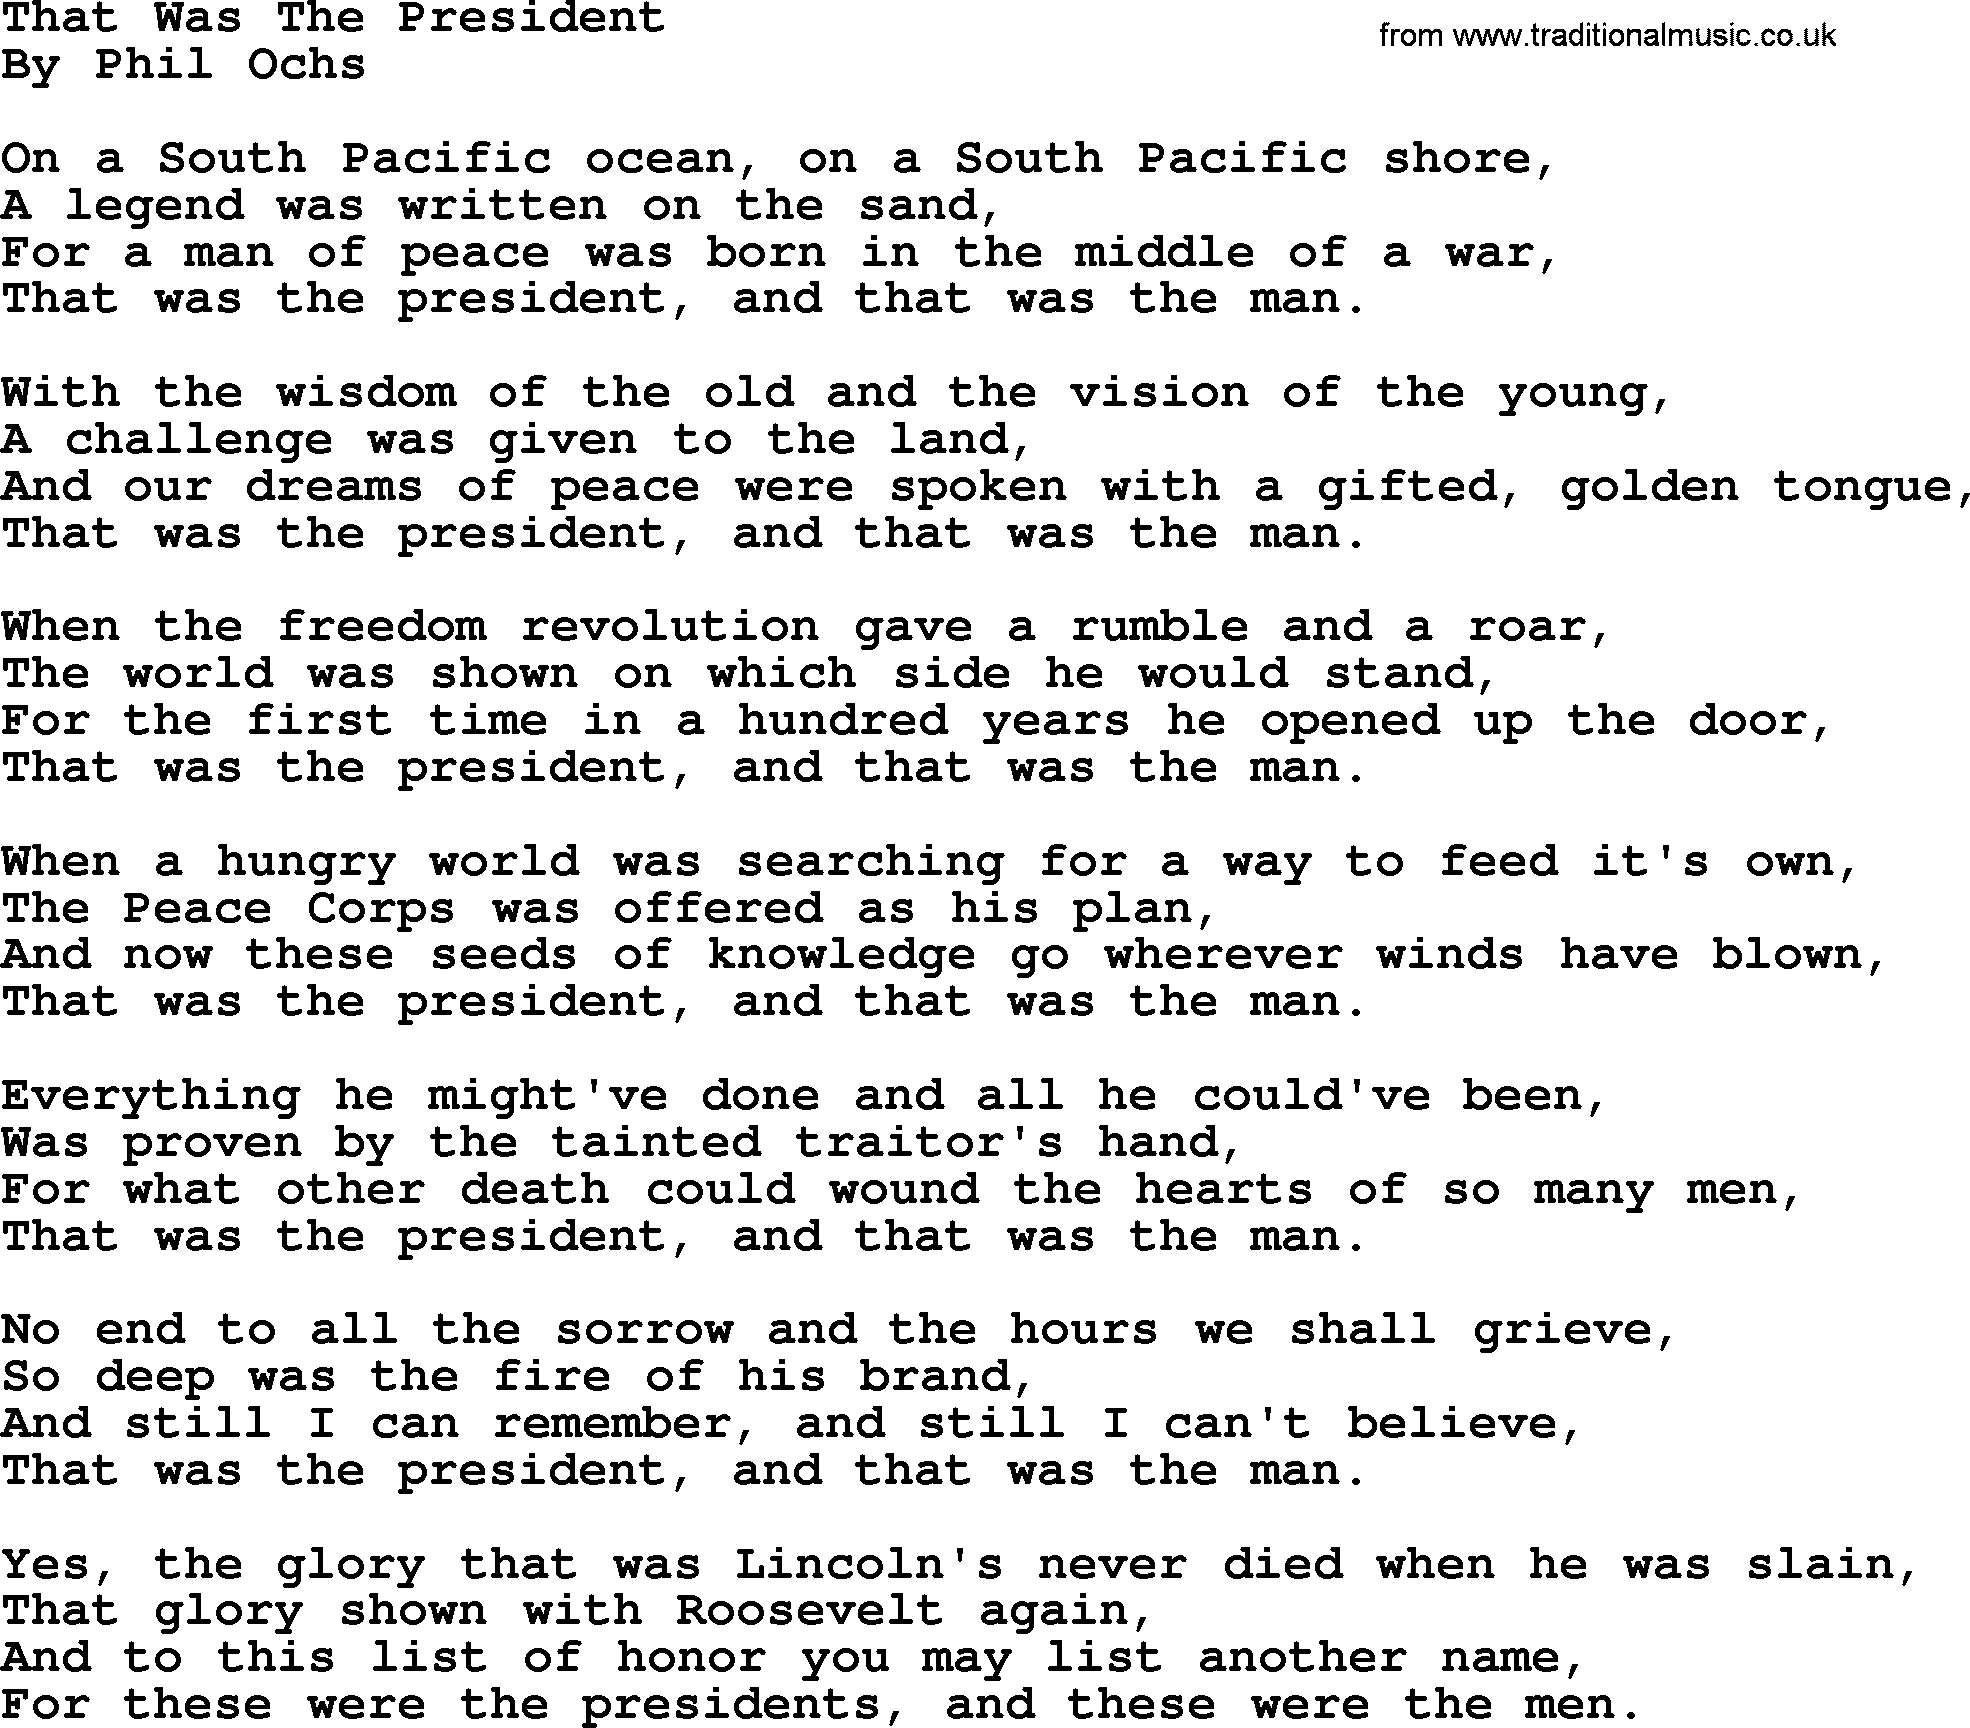 Phil Ochs song That Was The President, lyrics